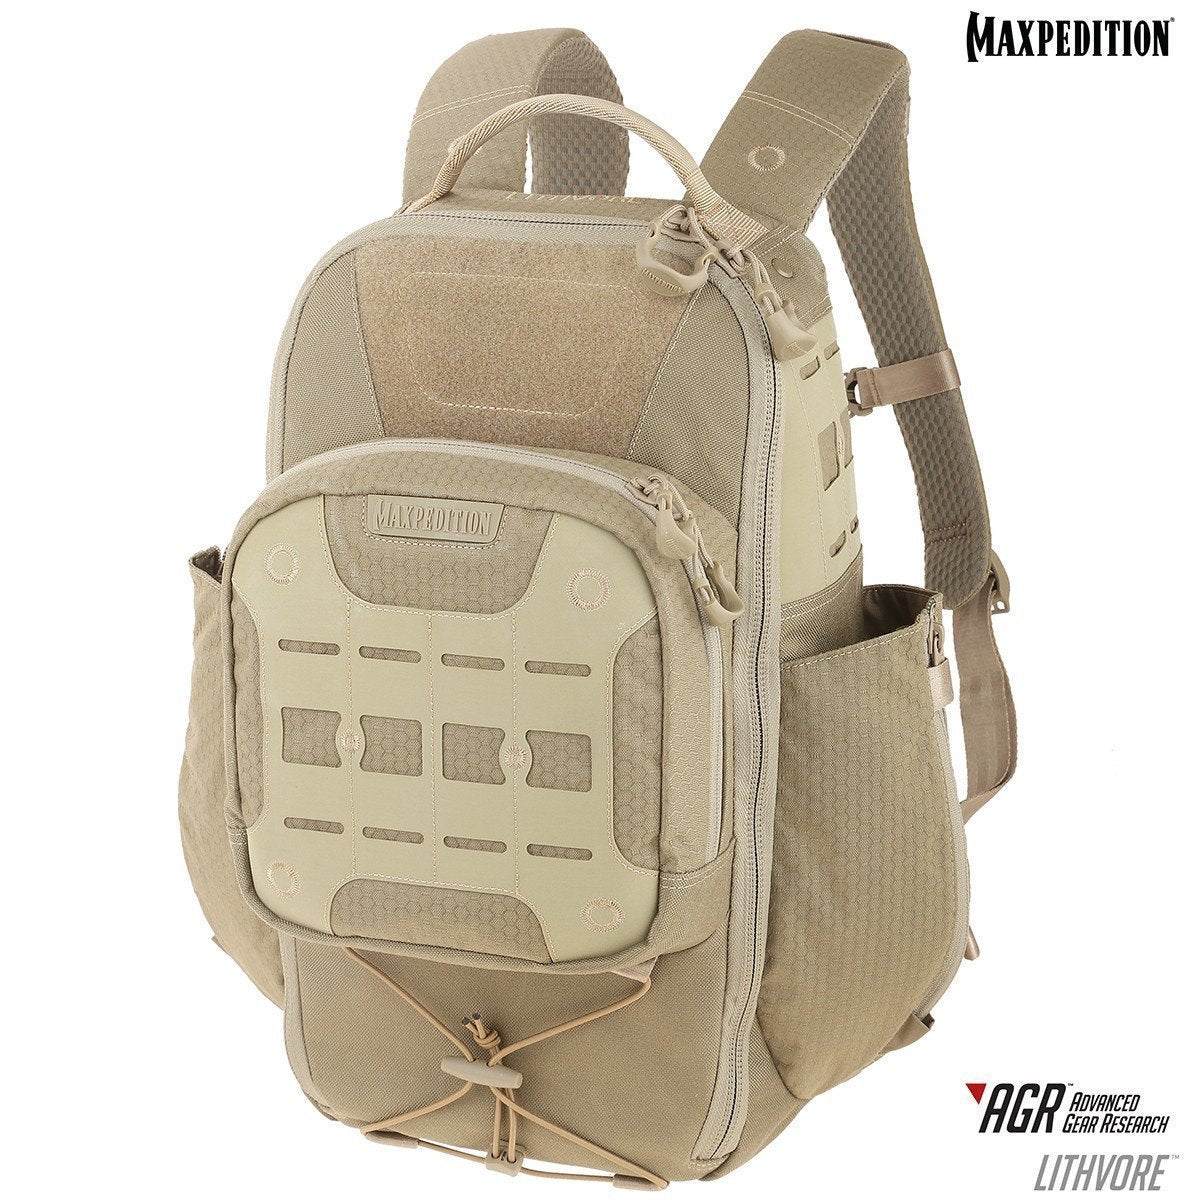 Maxpedition Lithvore Everyday Backpack 17L Tan Tactical Distributors Ltd New Zealand